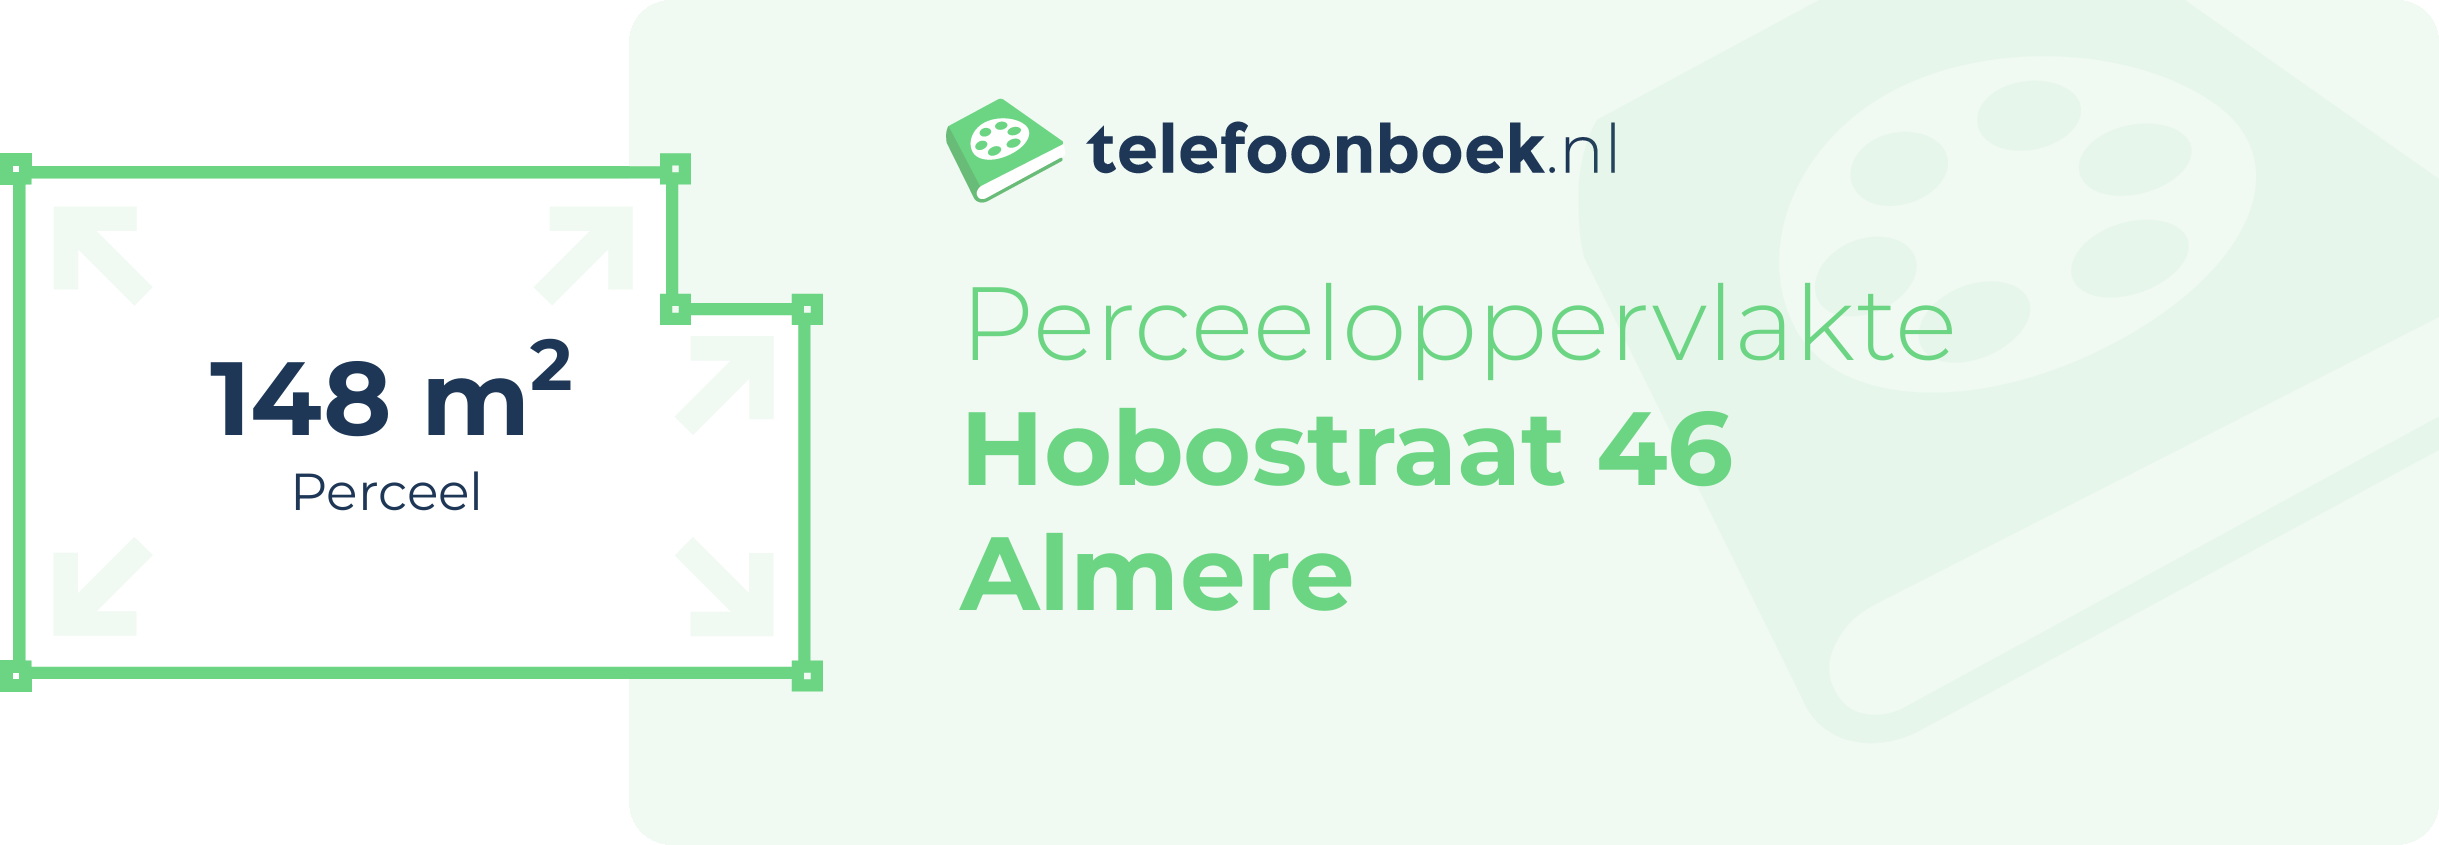 Perceeloppervlakte Hobostraat 46 Almere